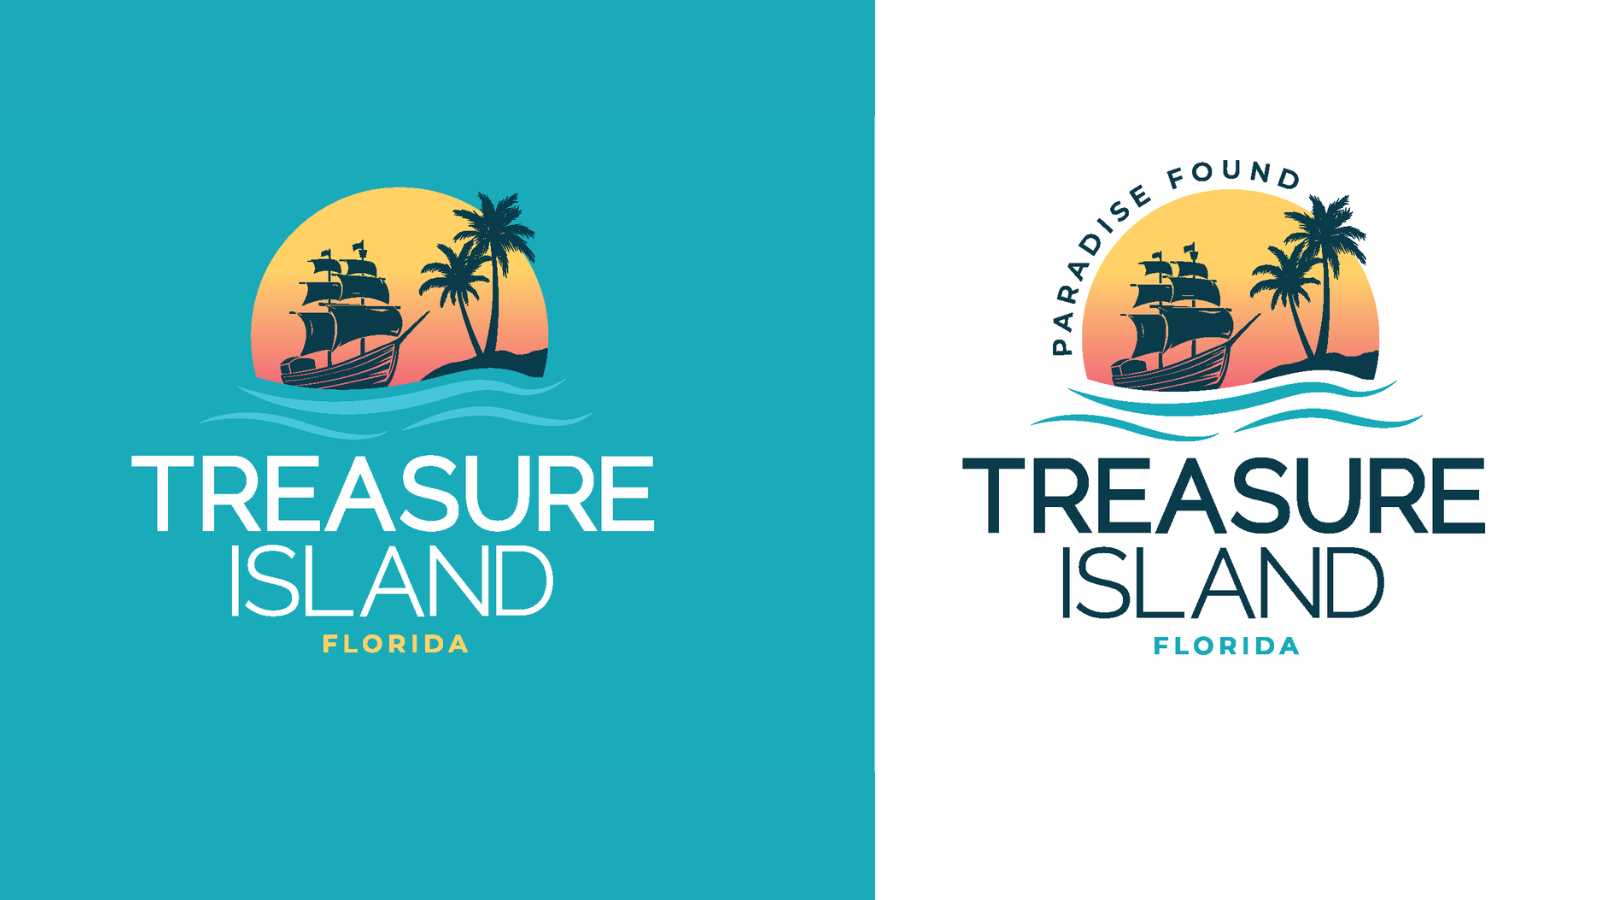 Treasure Data Logo PNG Transparent & SVG Vector - Freebie Supply